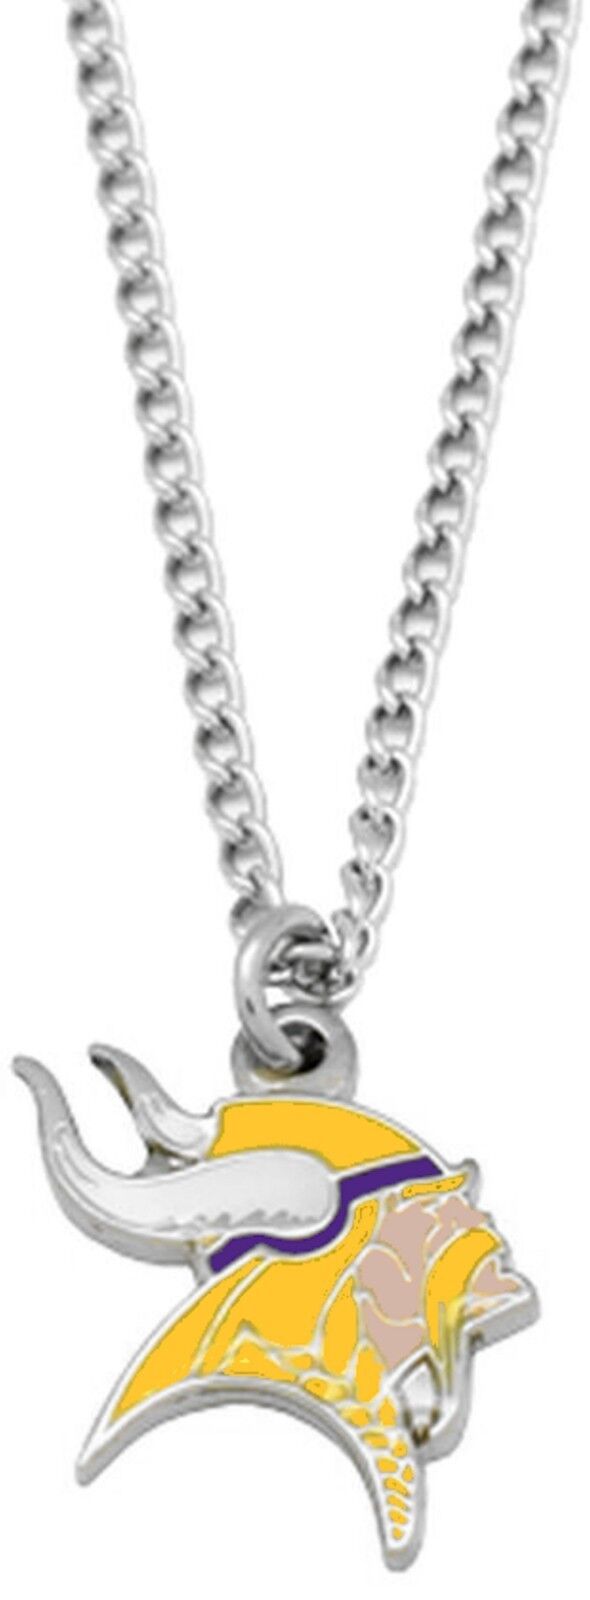 logo necklace charm pendant NFL PICK YOUR TEAM  Без бренда - фотография #6